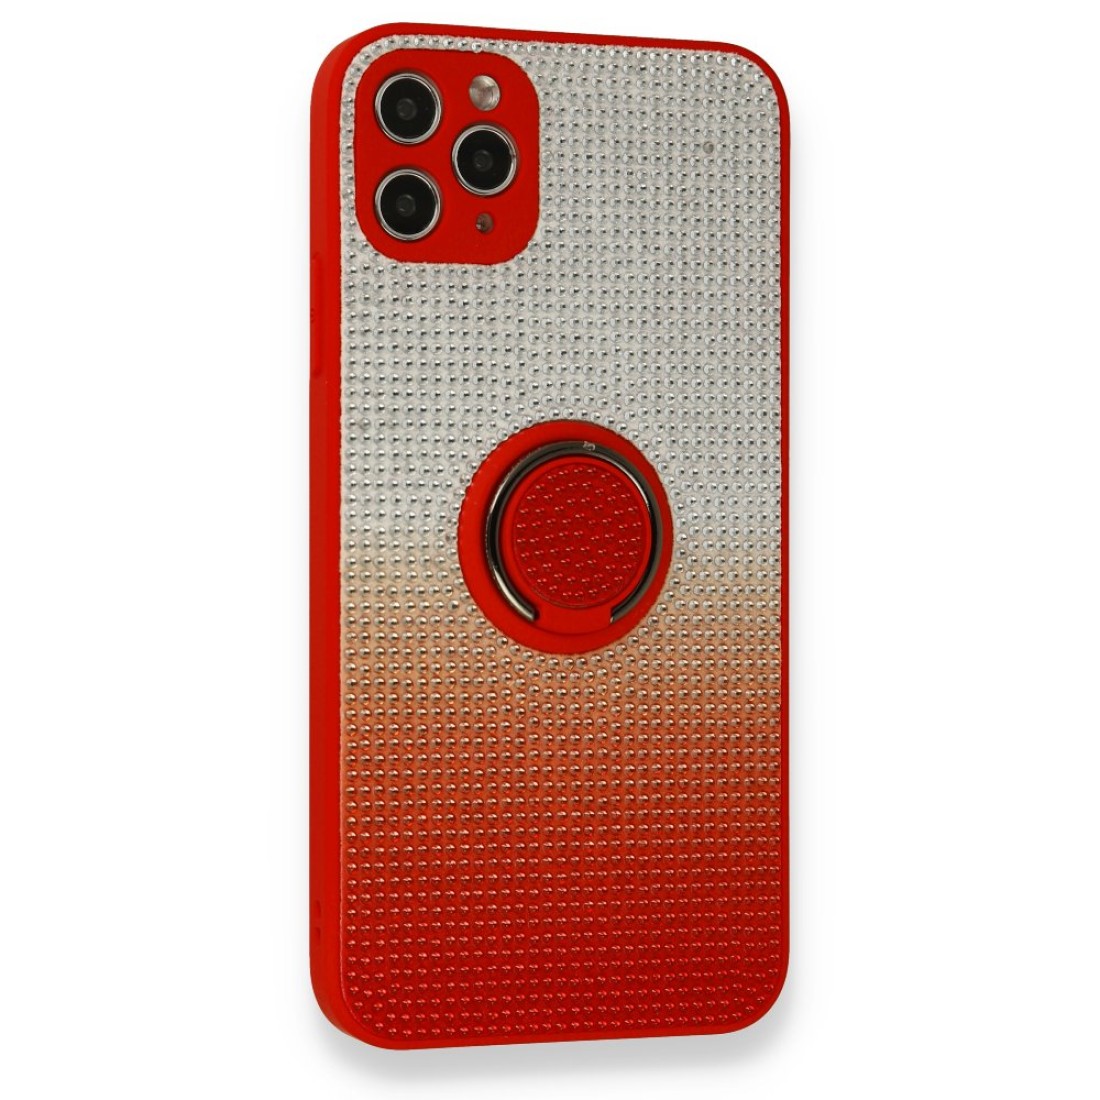 Apple iPhone 11 Pro Max Kılıf Daytona Yüzüklü Taşlı Silikon - Kırmızı